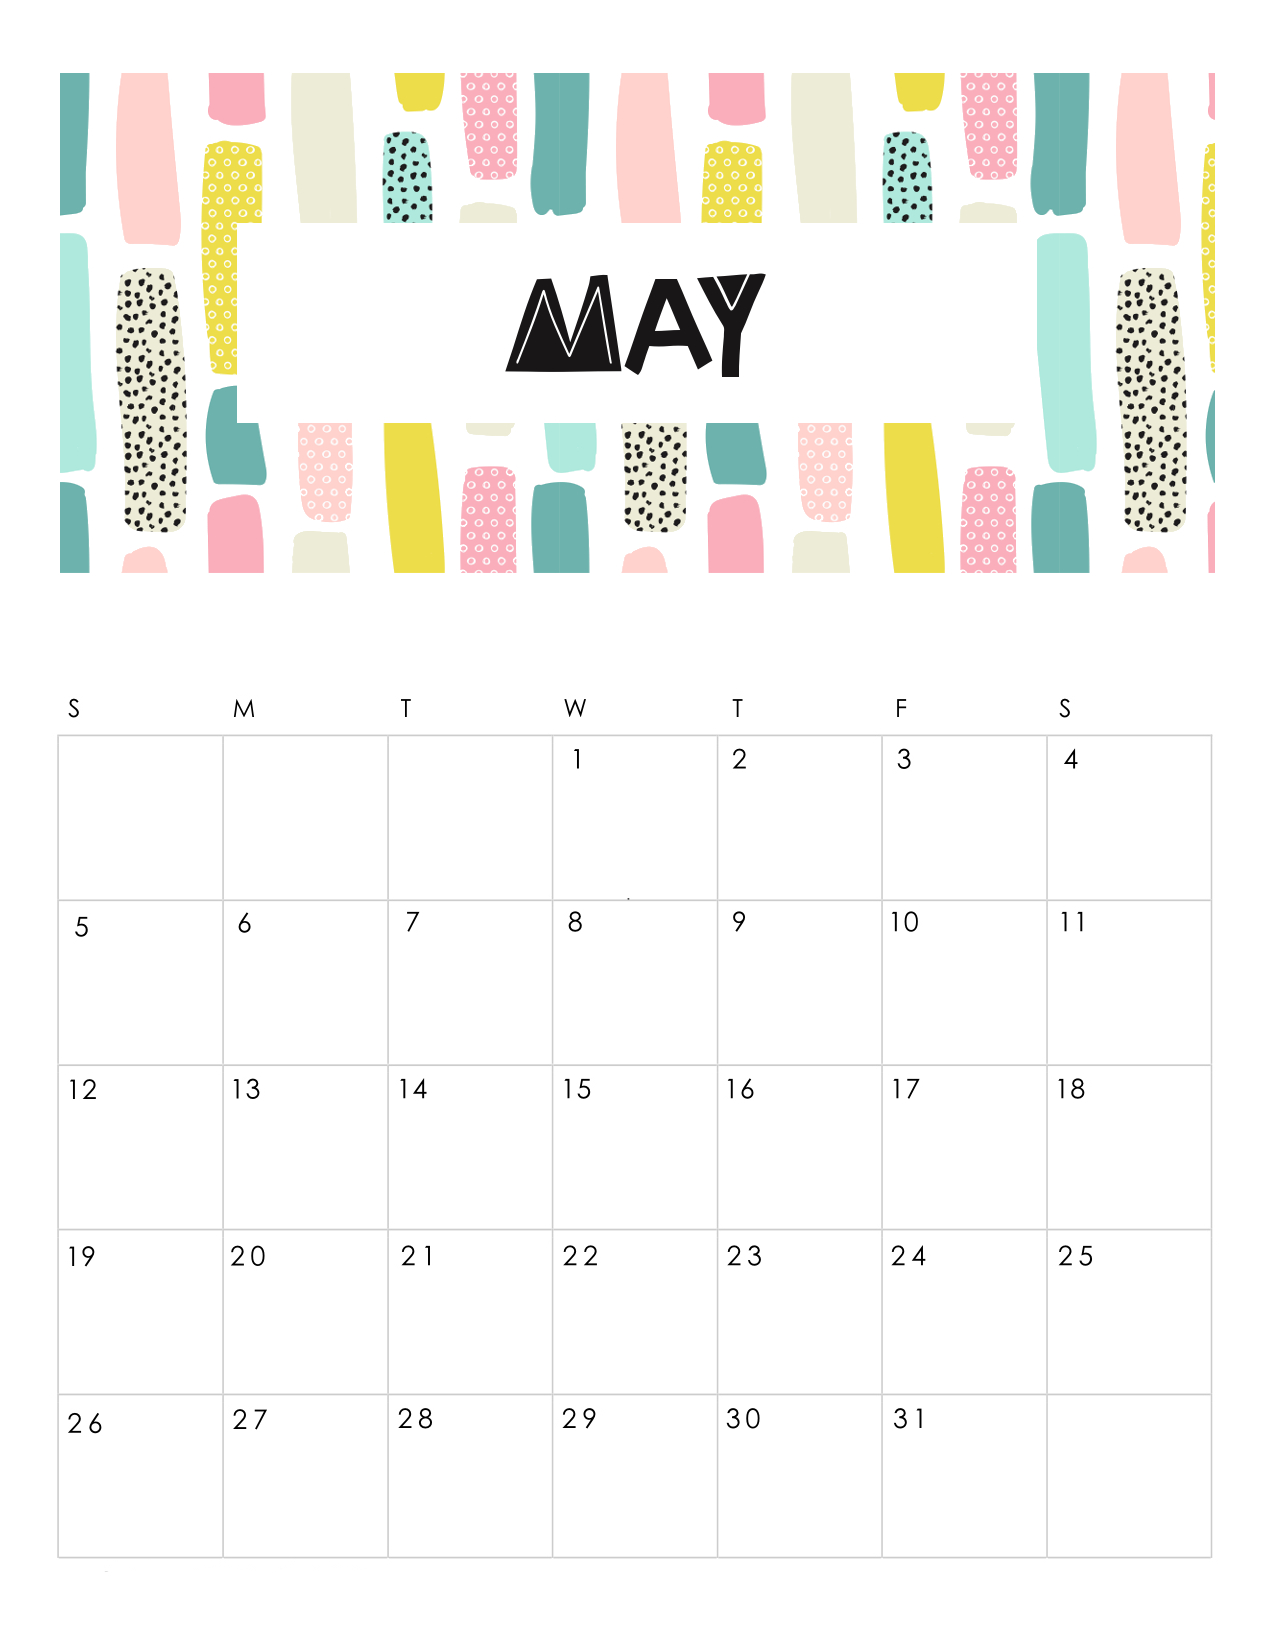 free-printable-abstract-patterned-calendar-2019-may.jpg